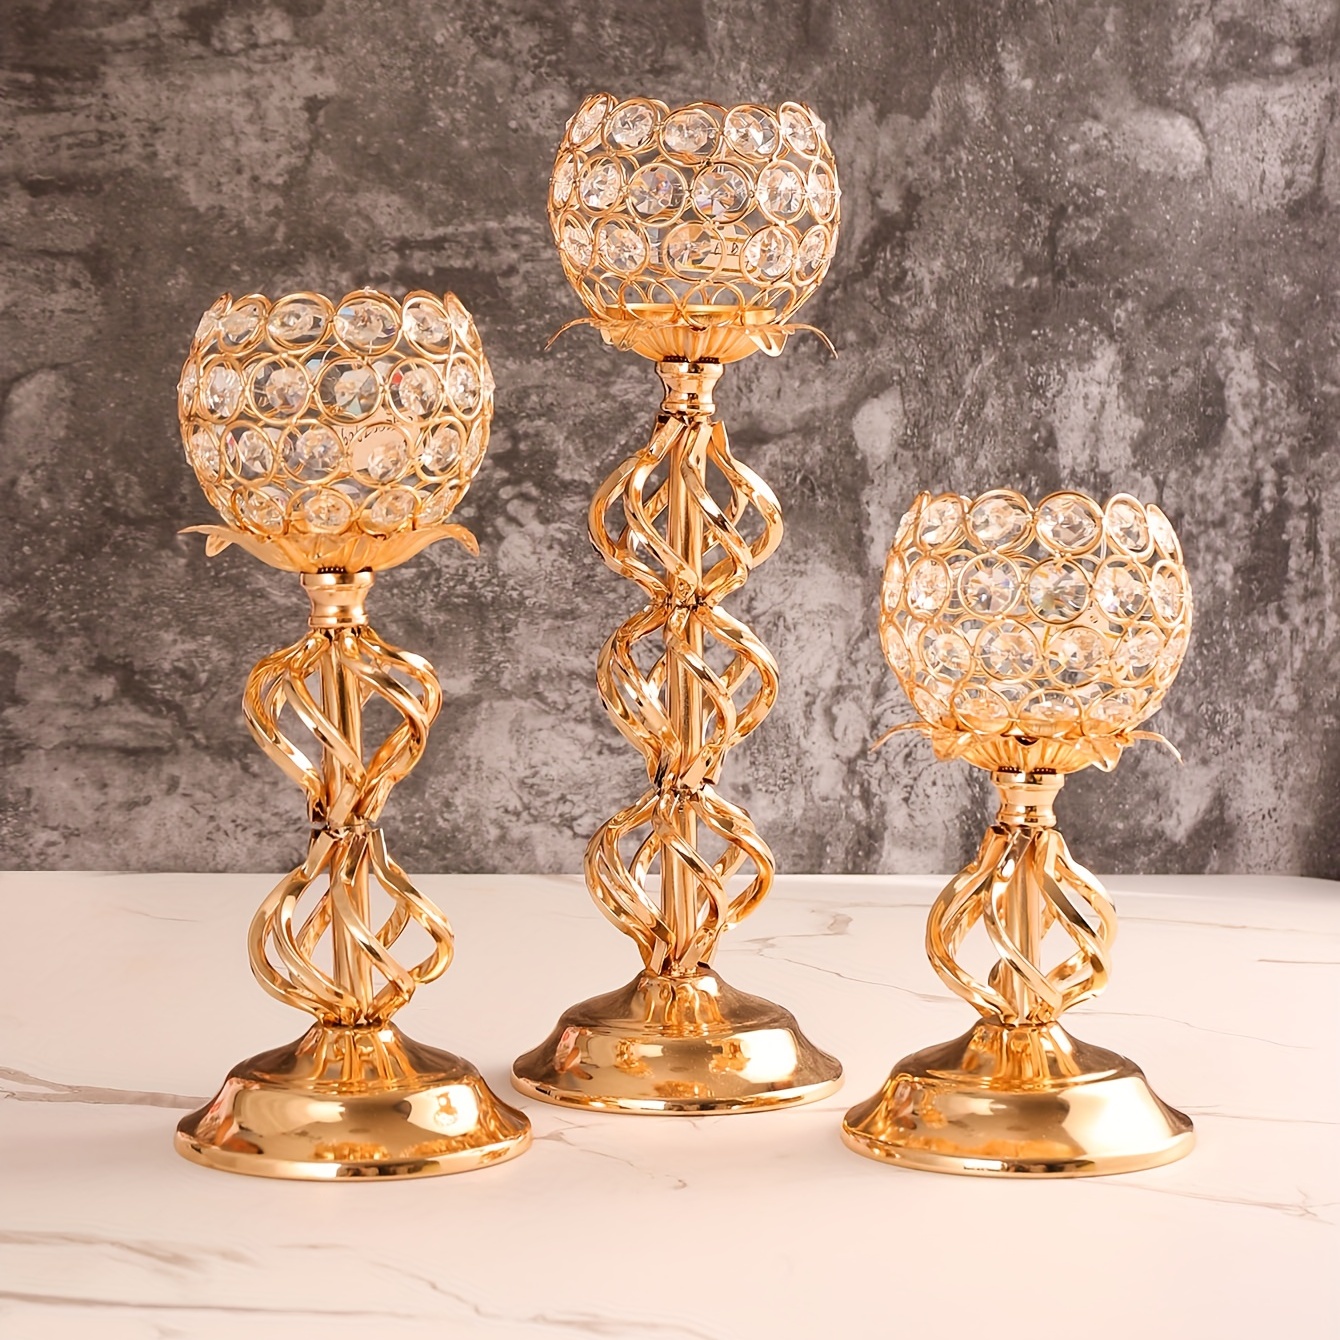 Candelabros decorativos de cristal plateado con 3 brazos, portavelas de  mesa, centro de mesa, decoración para mesa de comedor, decoración del  hogar